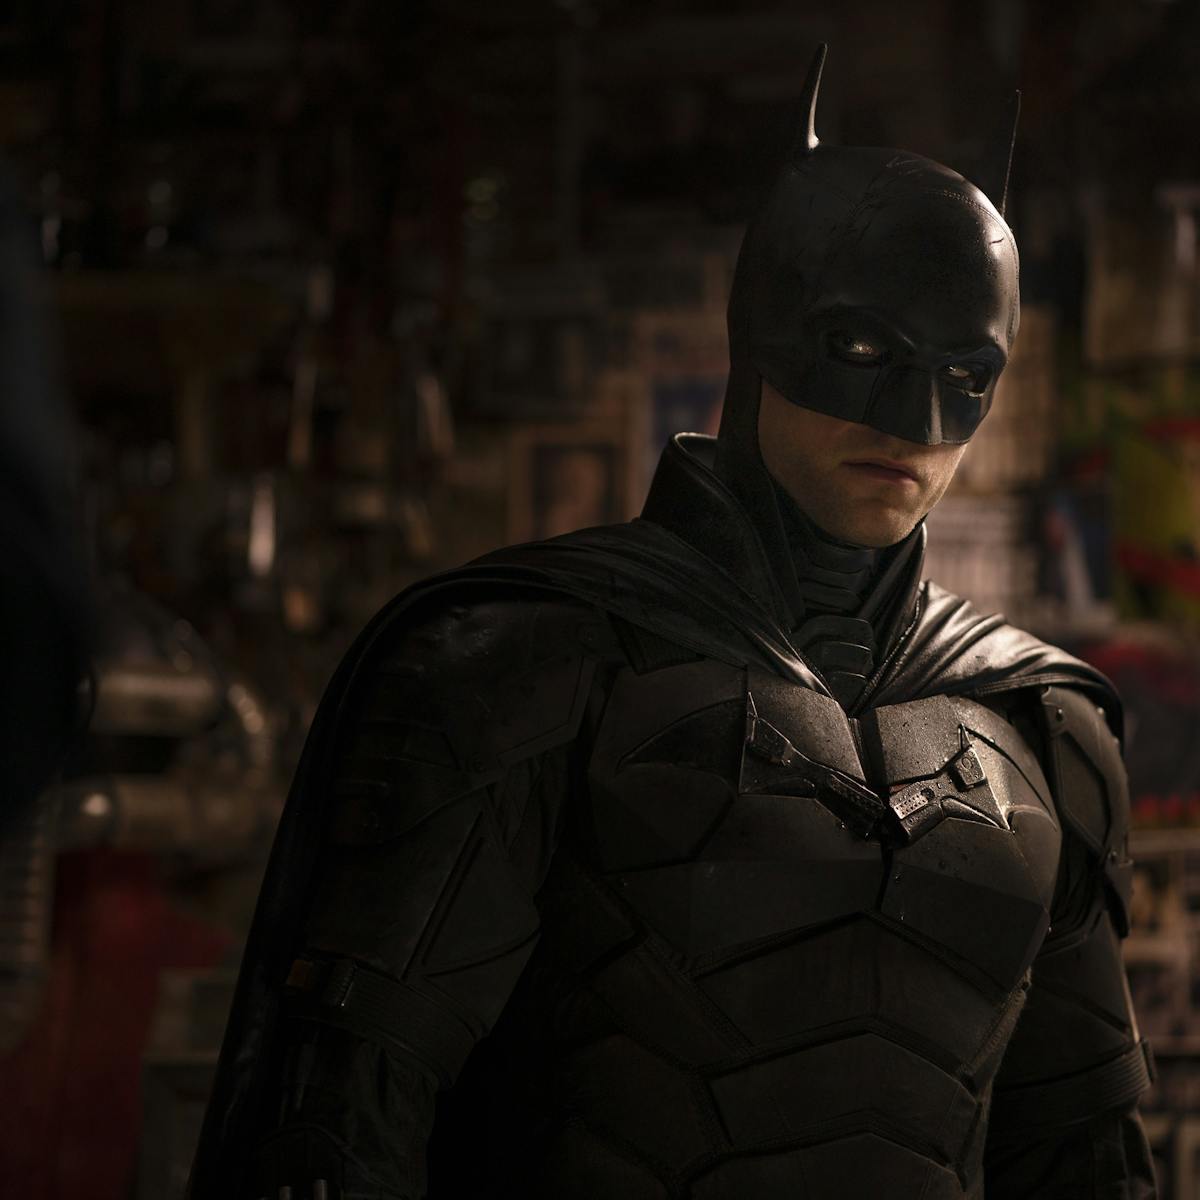 The Batman: the Dark Knight on screen has always reflected ...